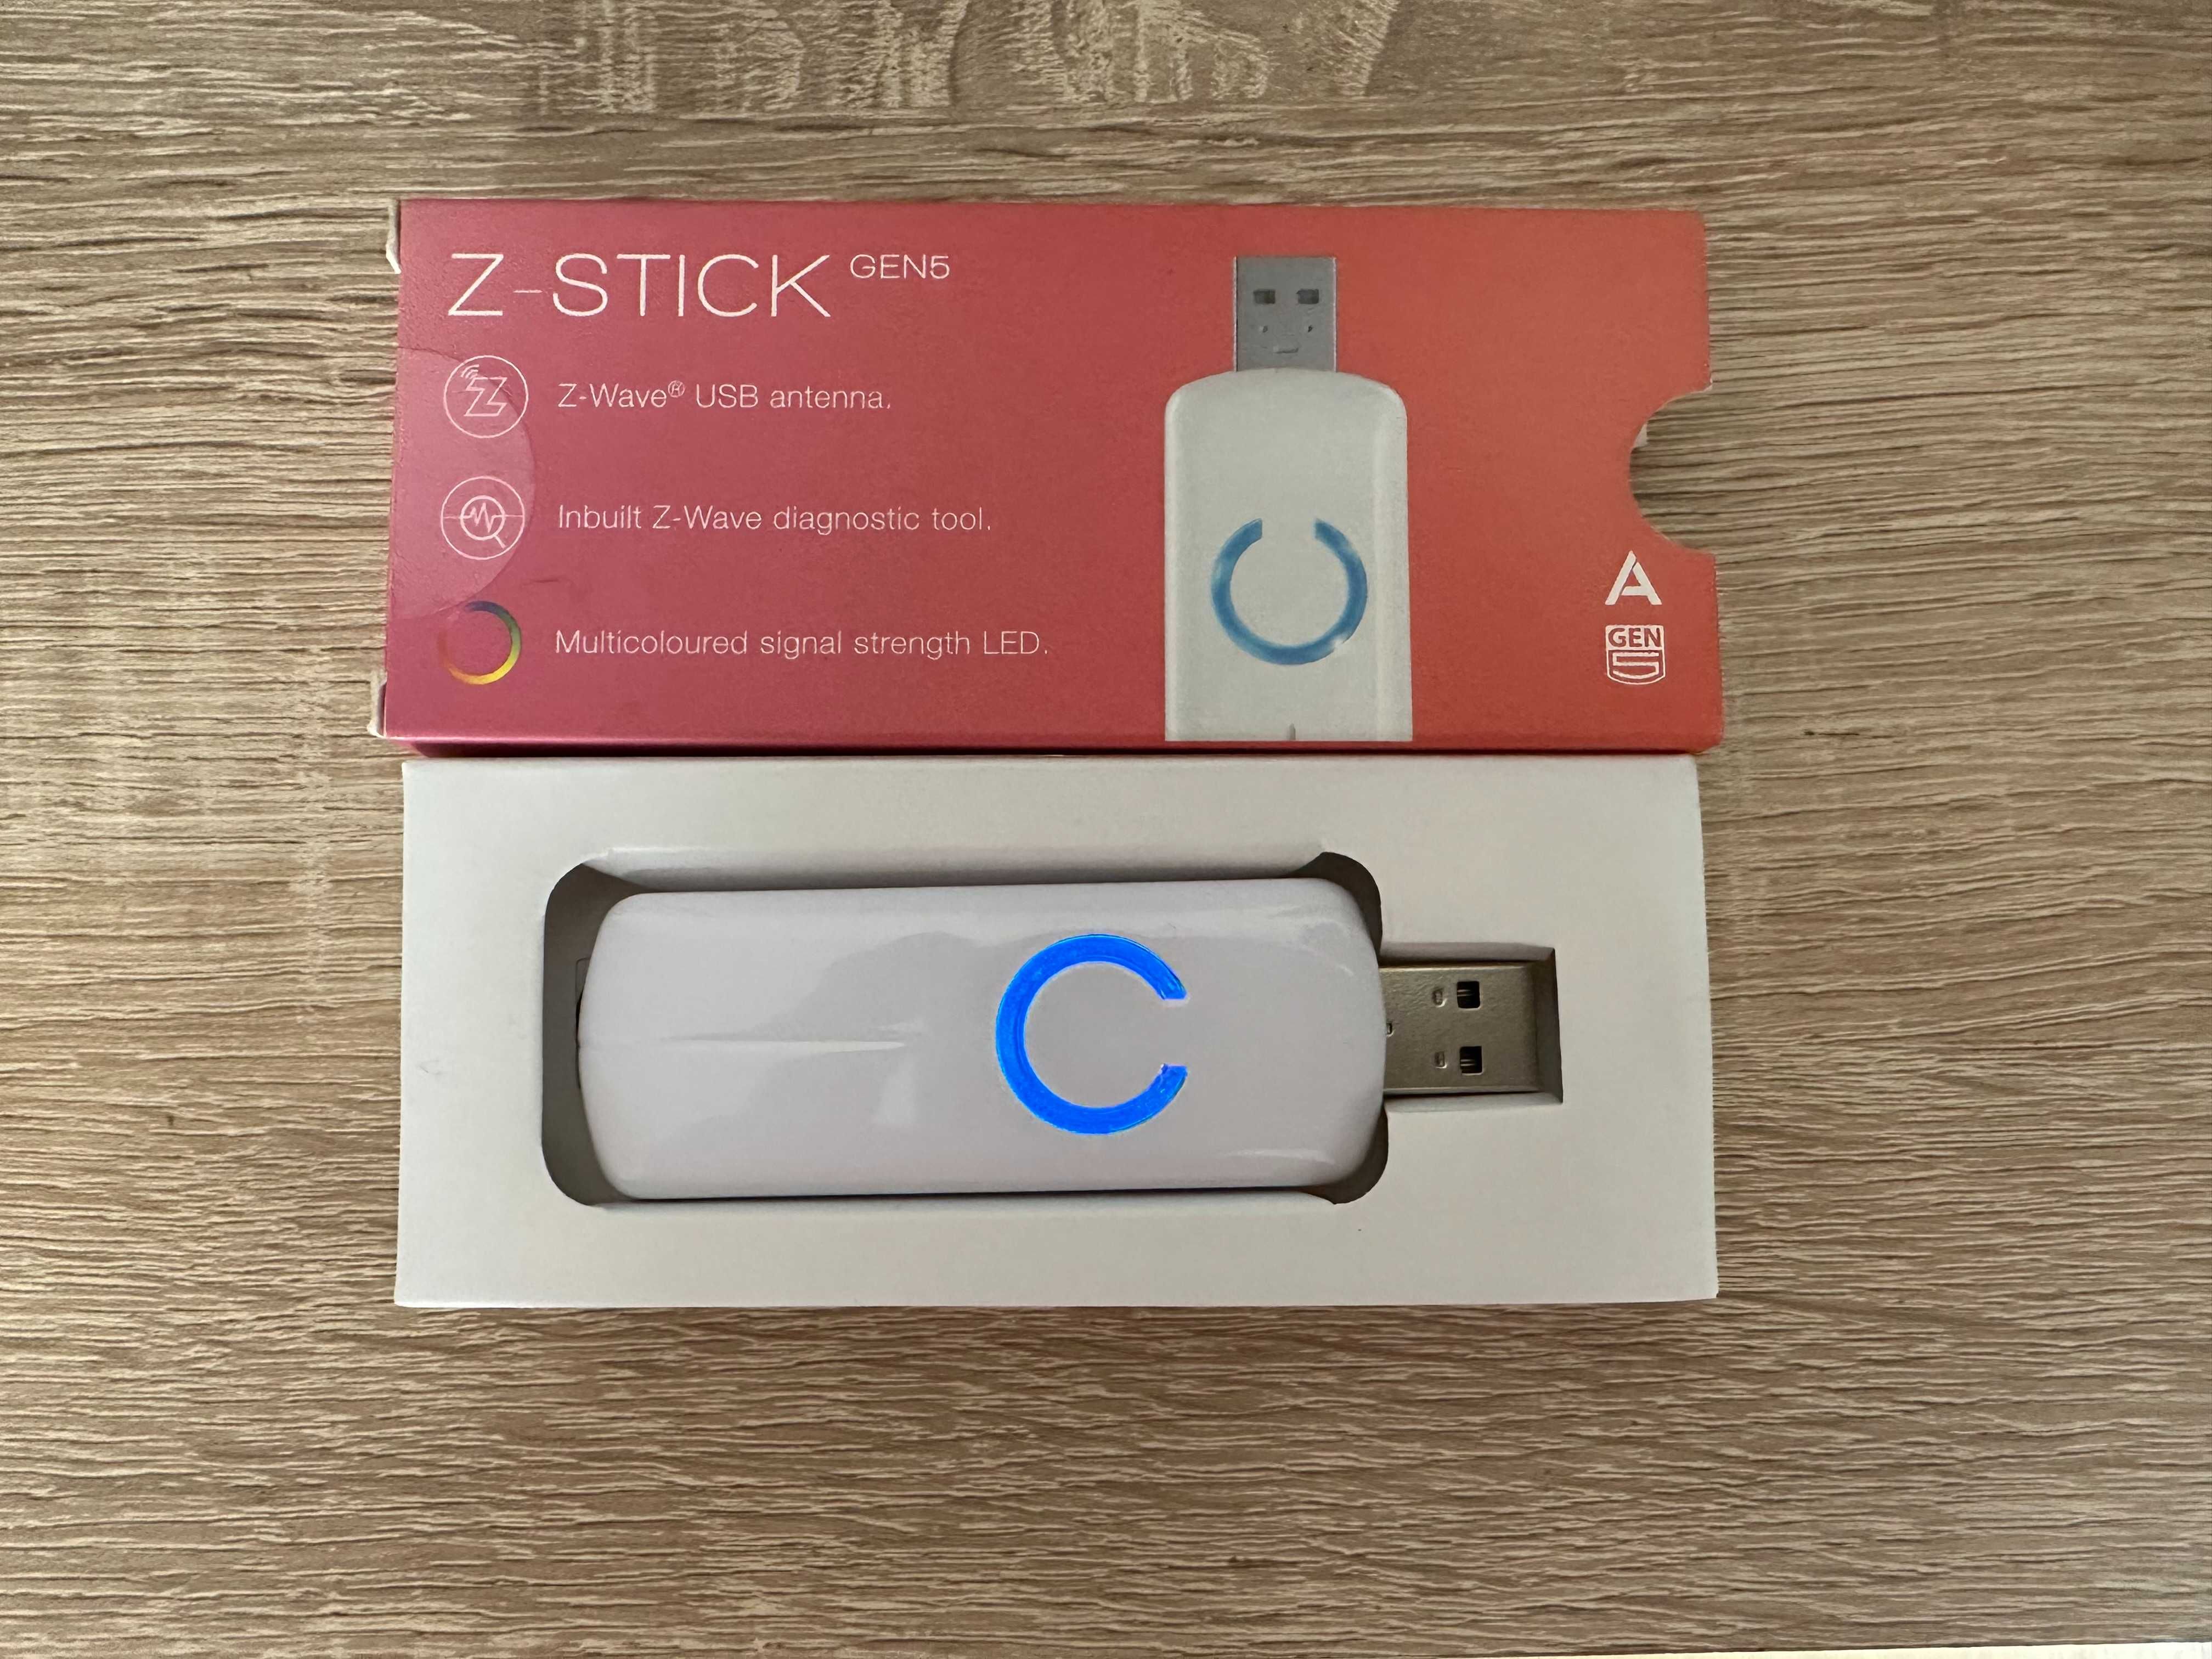 Stick Zwave USB Z-STICK GEN5